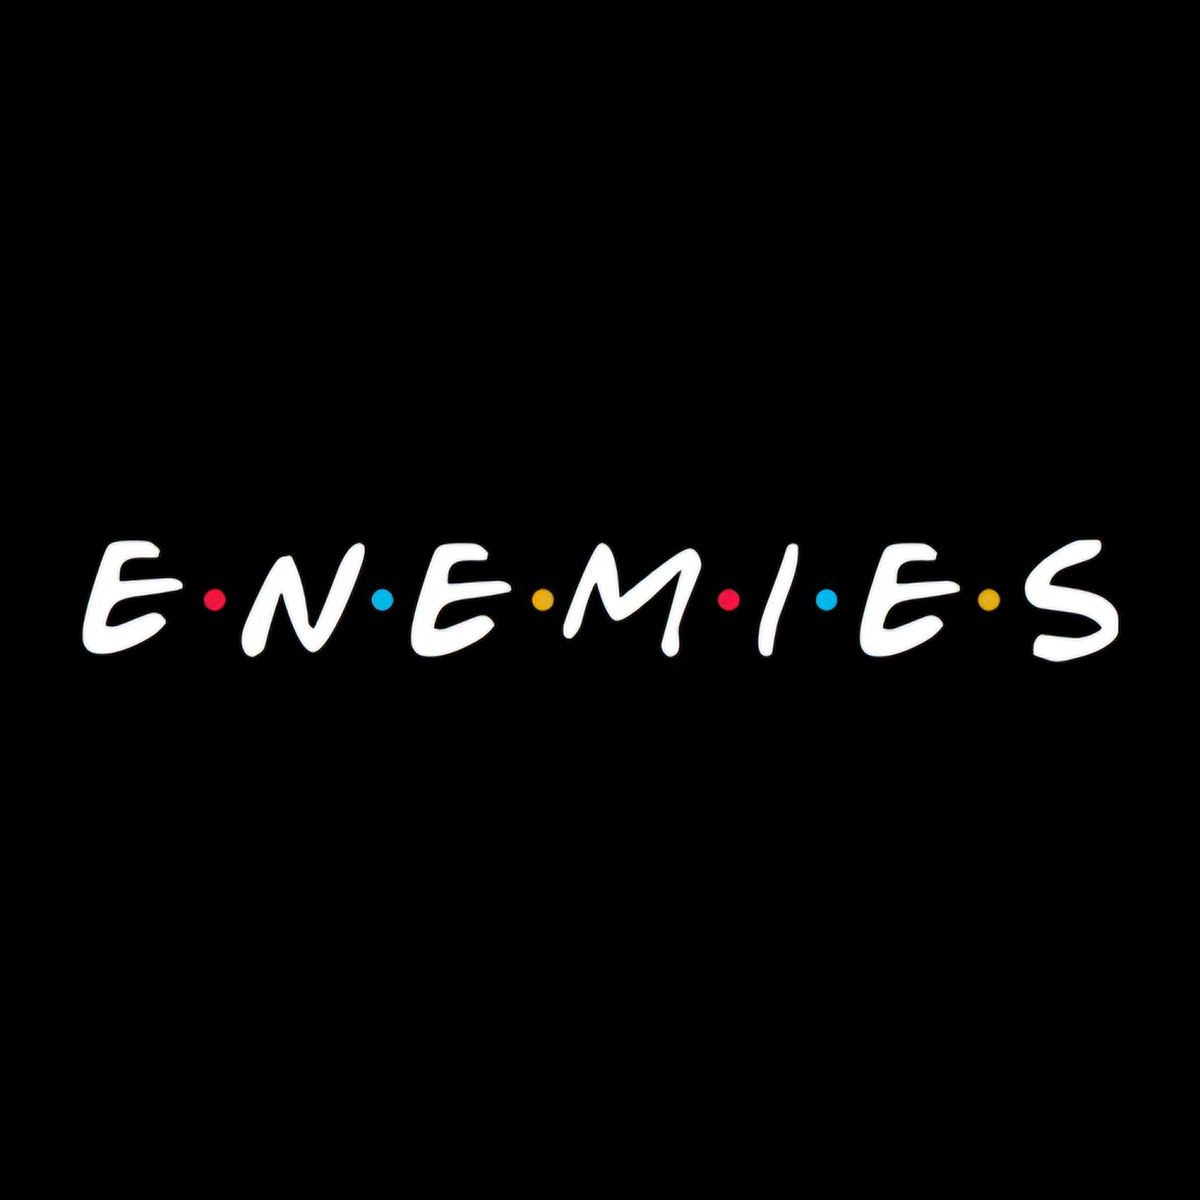 Nome do produto: Enemies